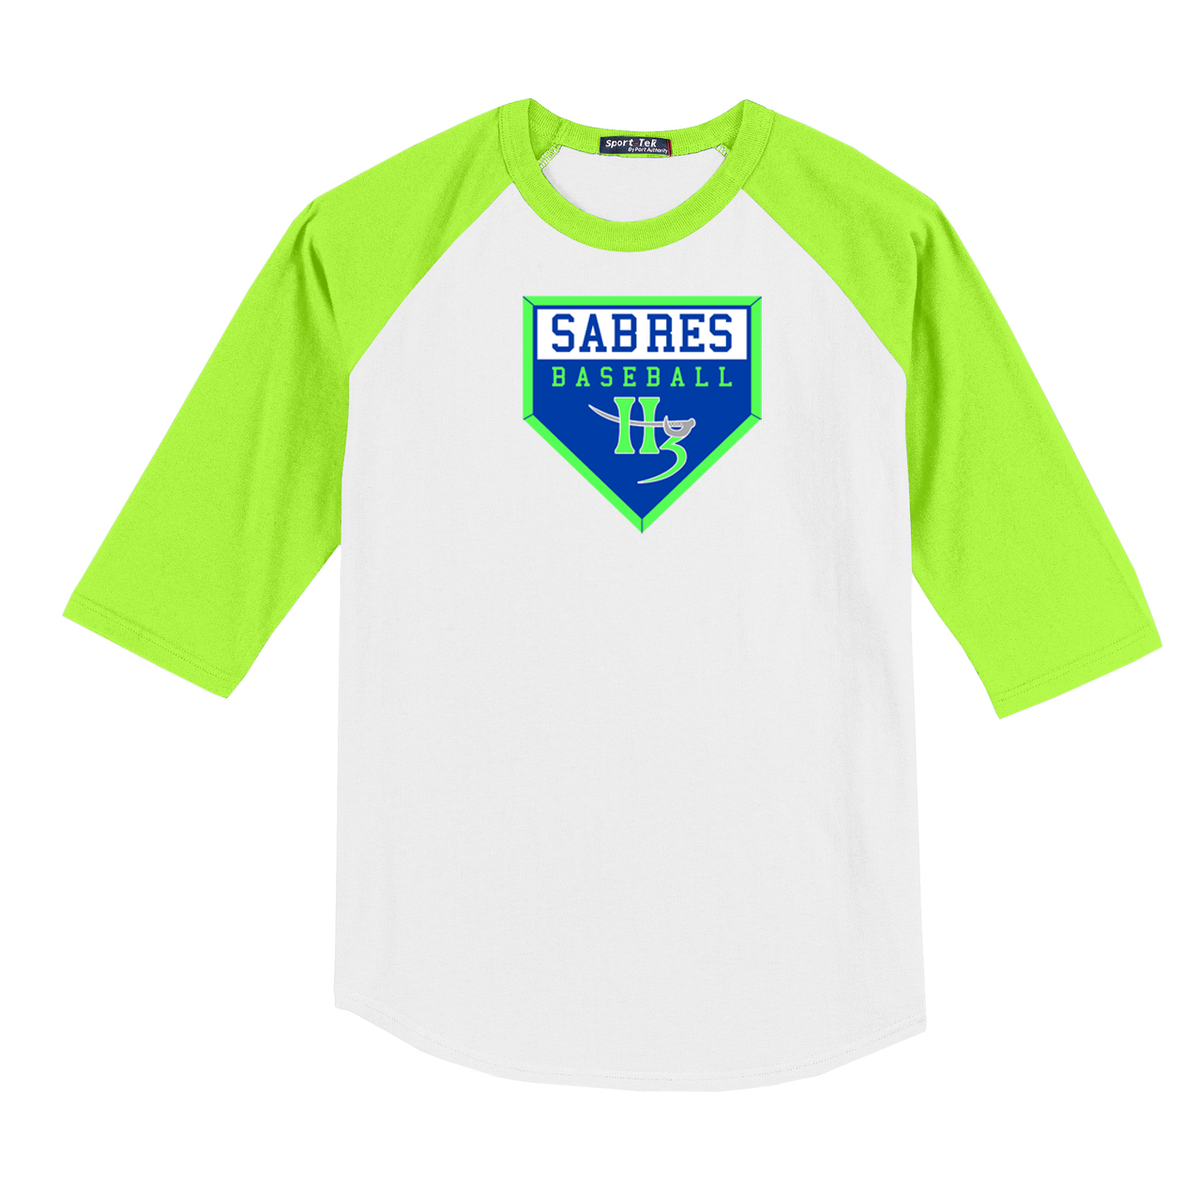 H3 Sabres Baseball  3/4 Sleeve Baseball Shirt